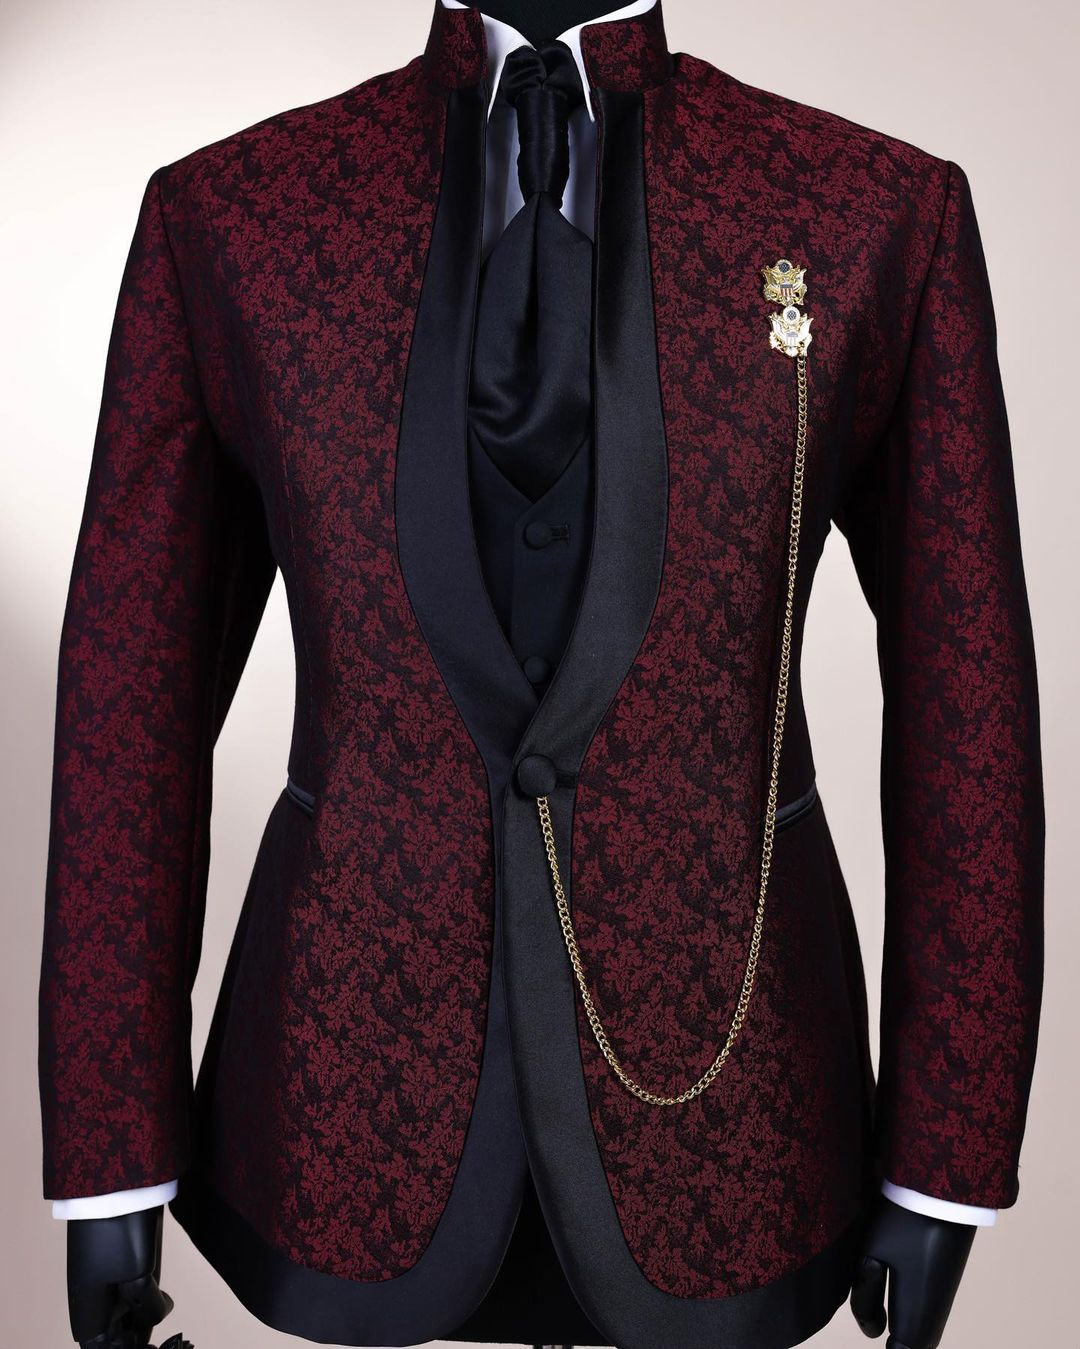 Shop Reloaded “Pope” monochrome black and burgundy suit - Deji & Kola